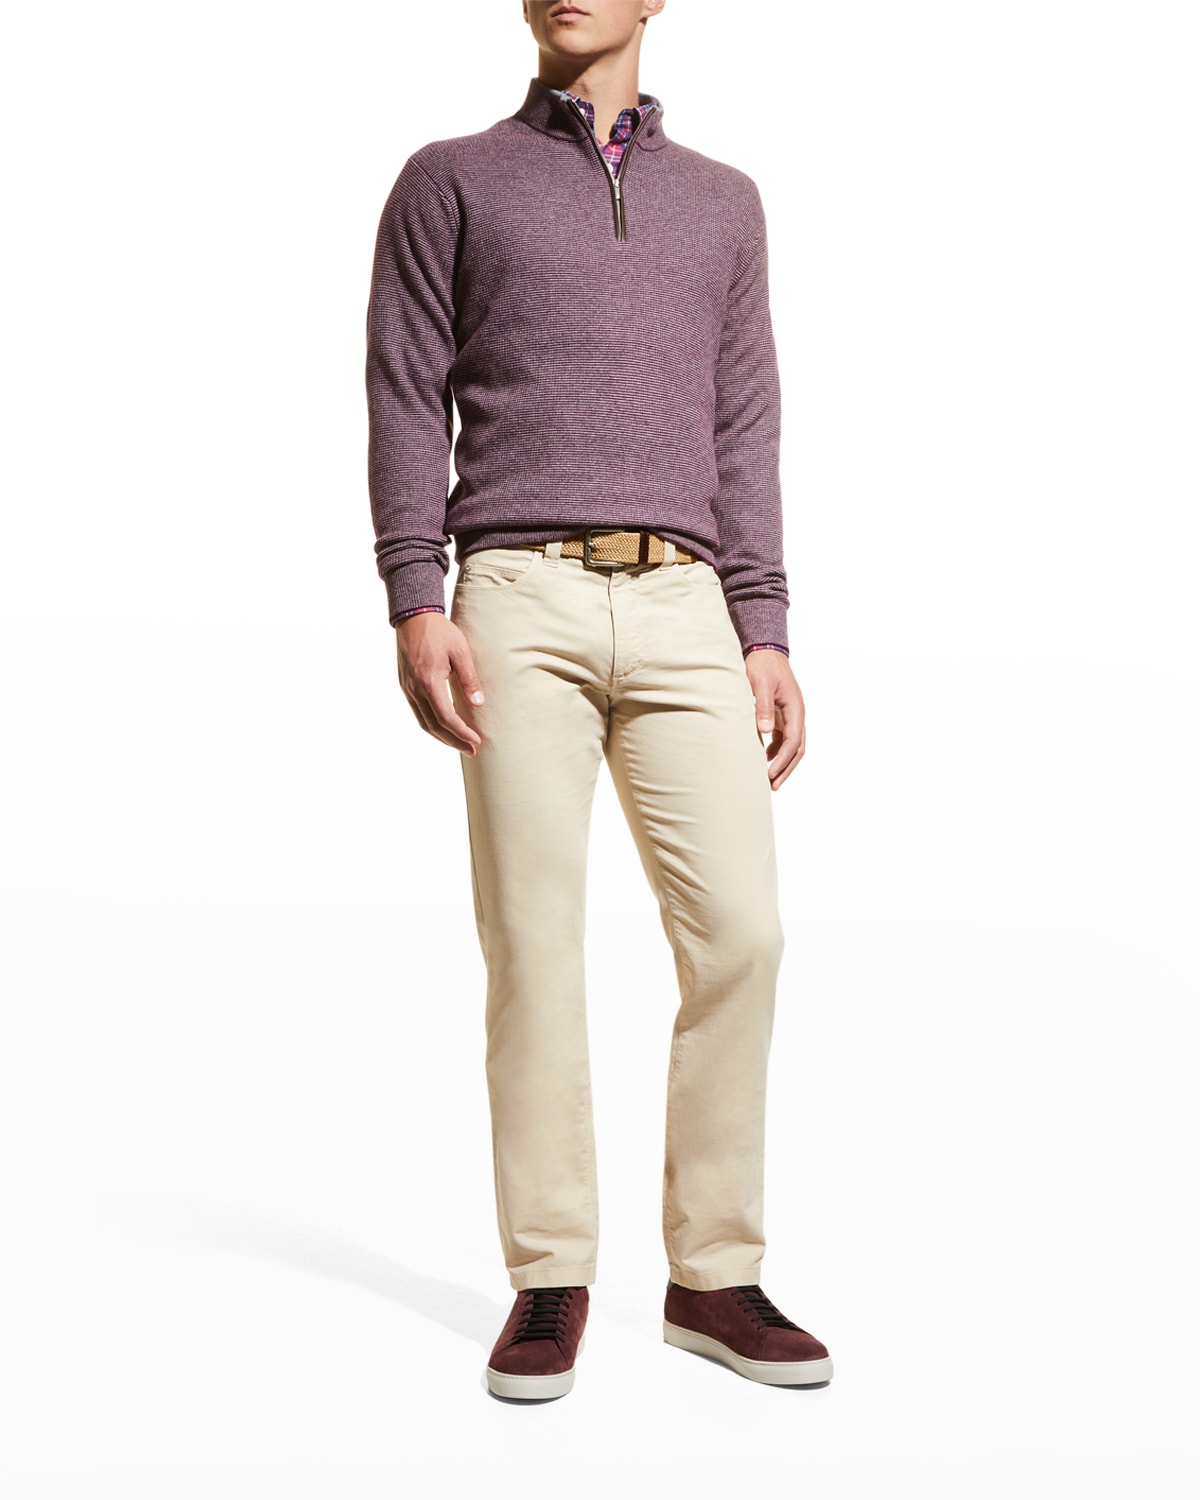 Peter Millar Men's Wool-Cashmere Quarter Zip Sweater